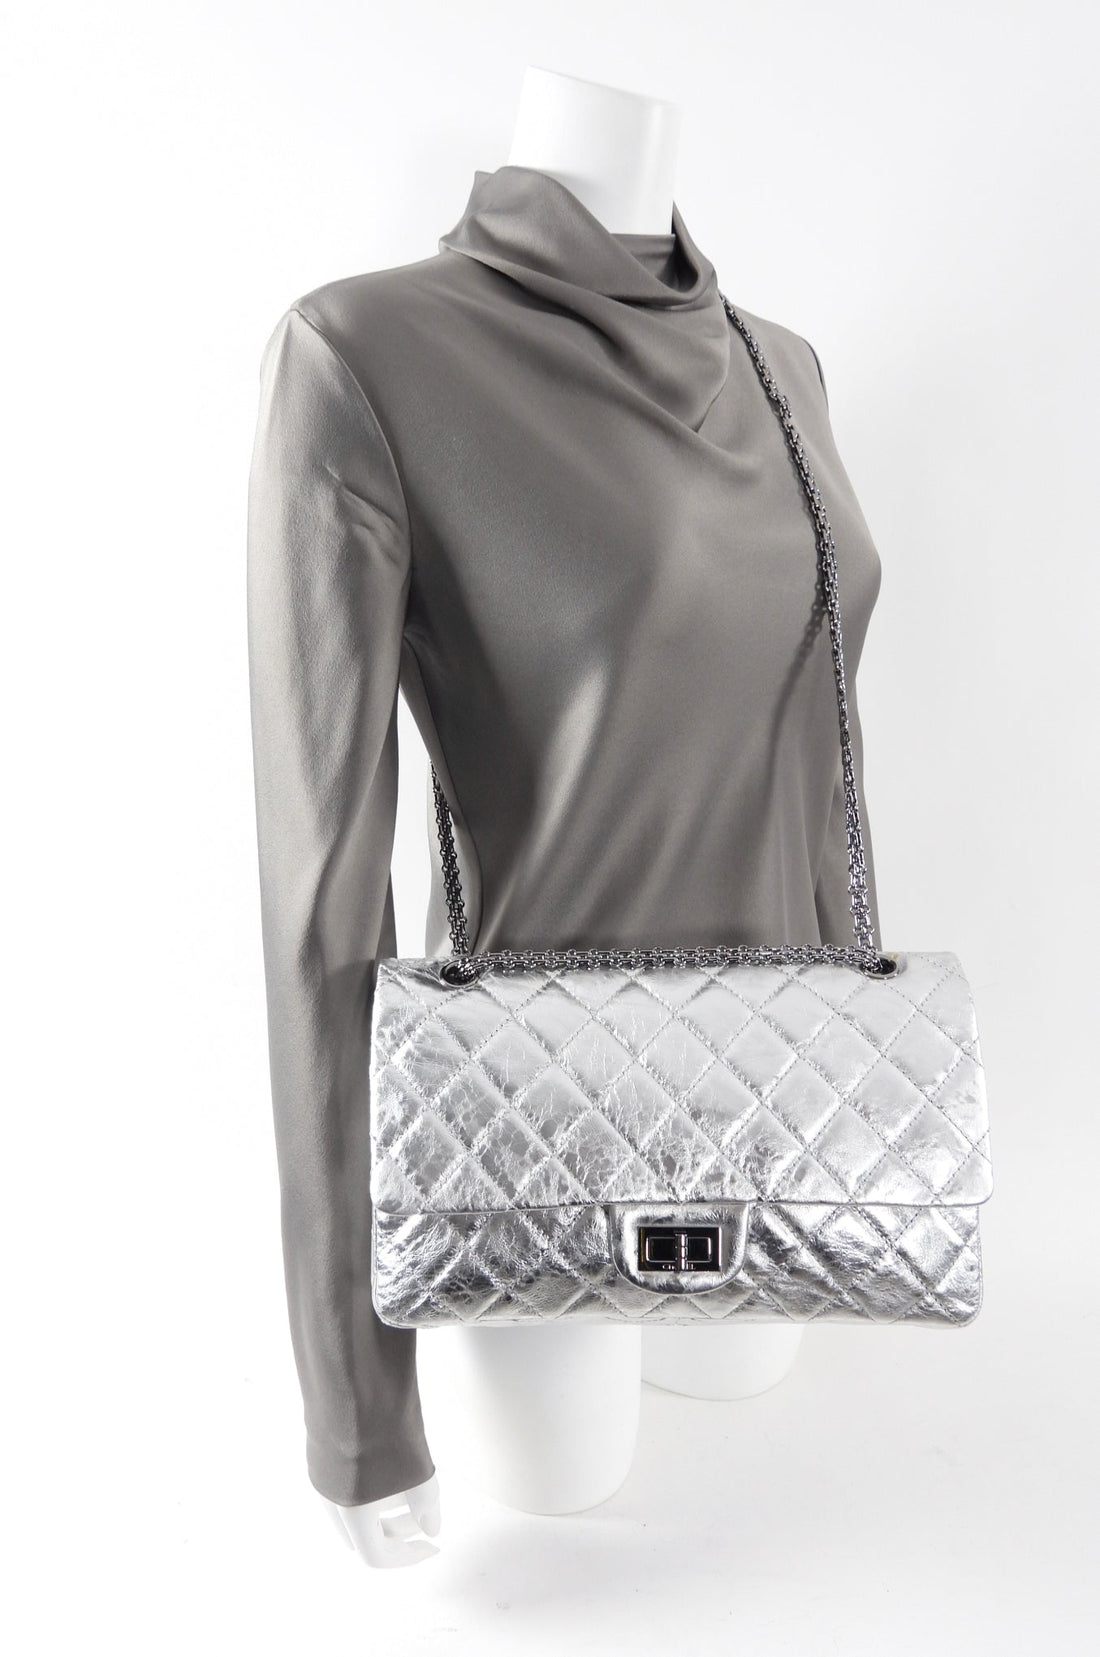 Chanel 2.55 Reissue 227 Maxi Flap Shoulder Bag Metallic Grey Aged Calfskin